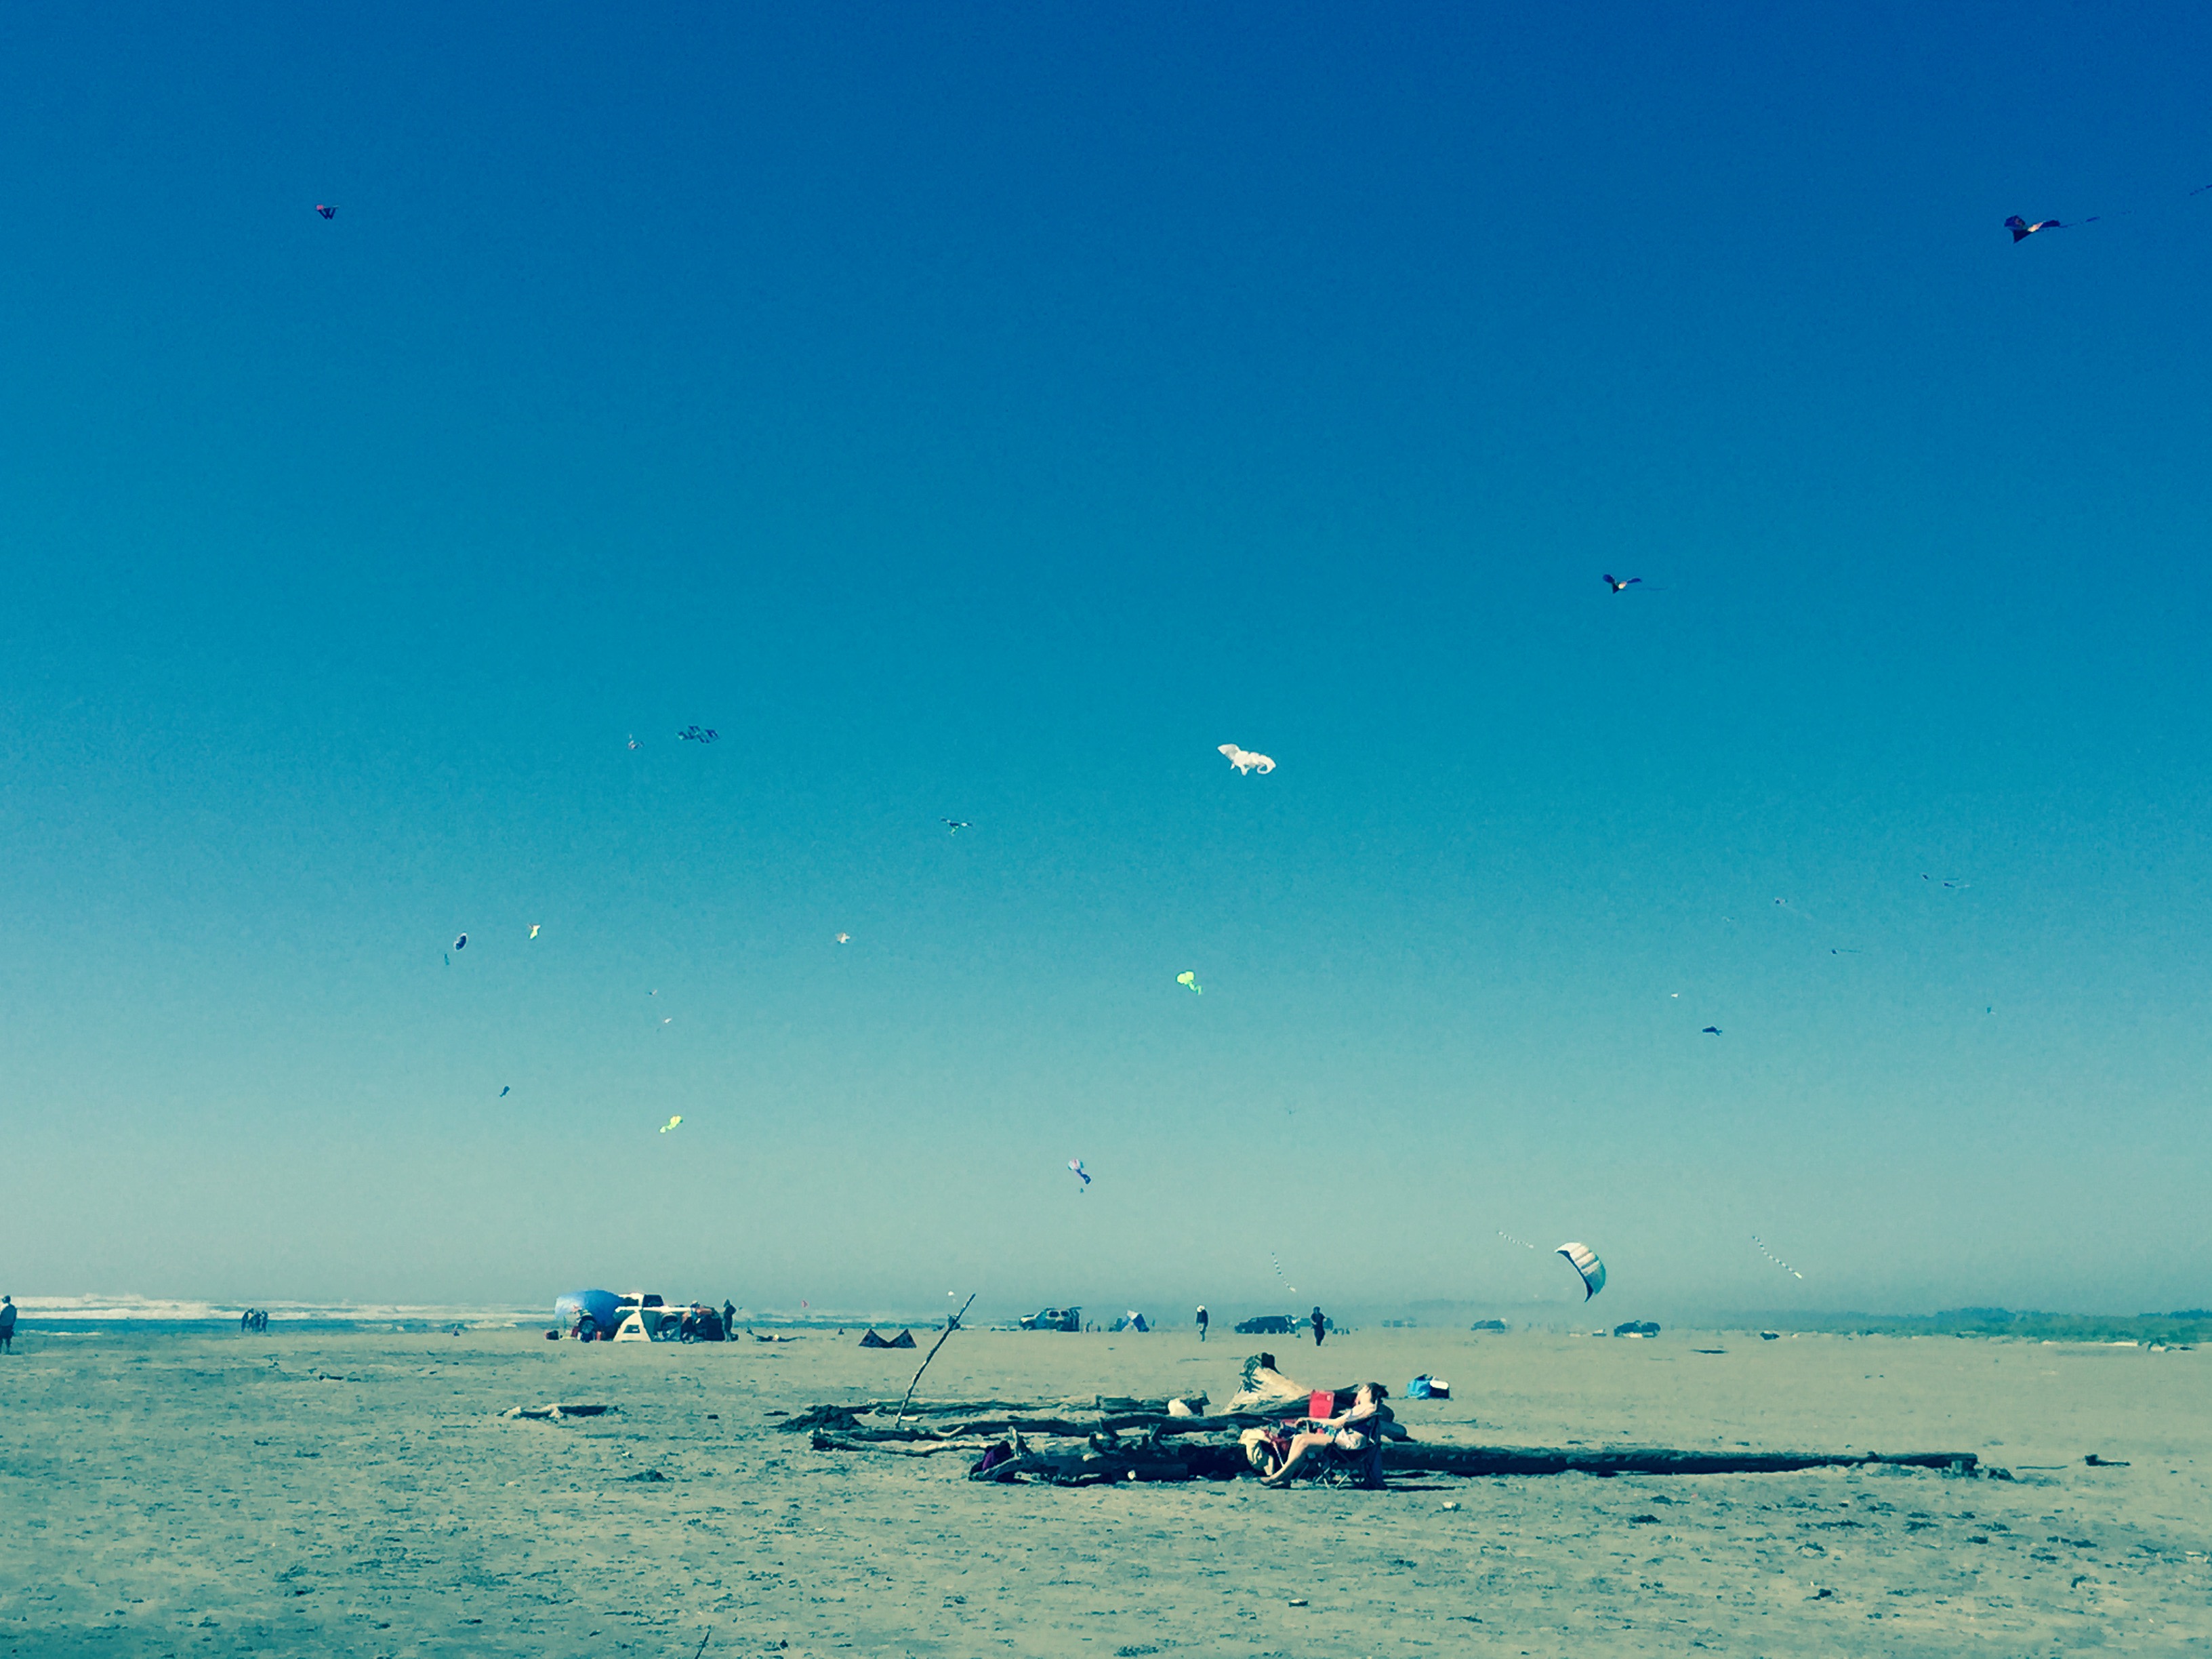 Kites at the beach